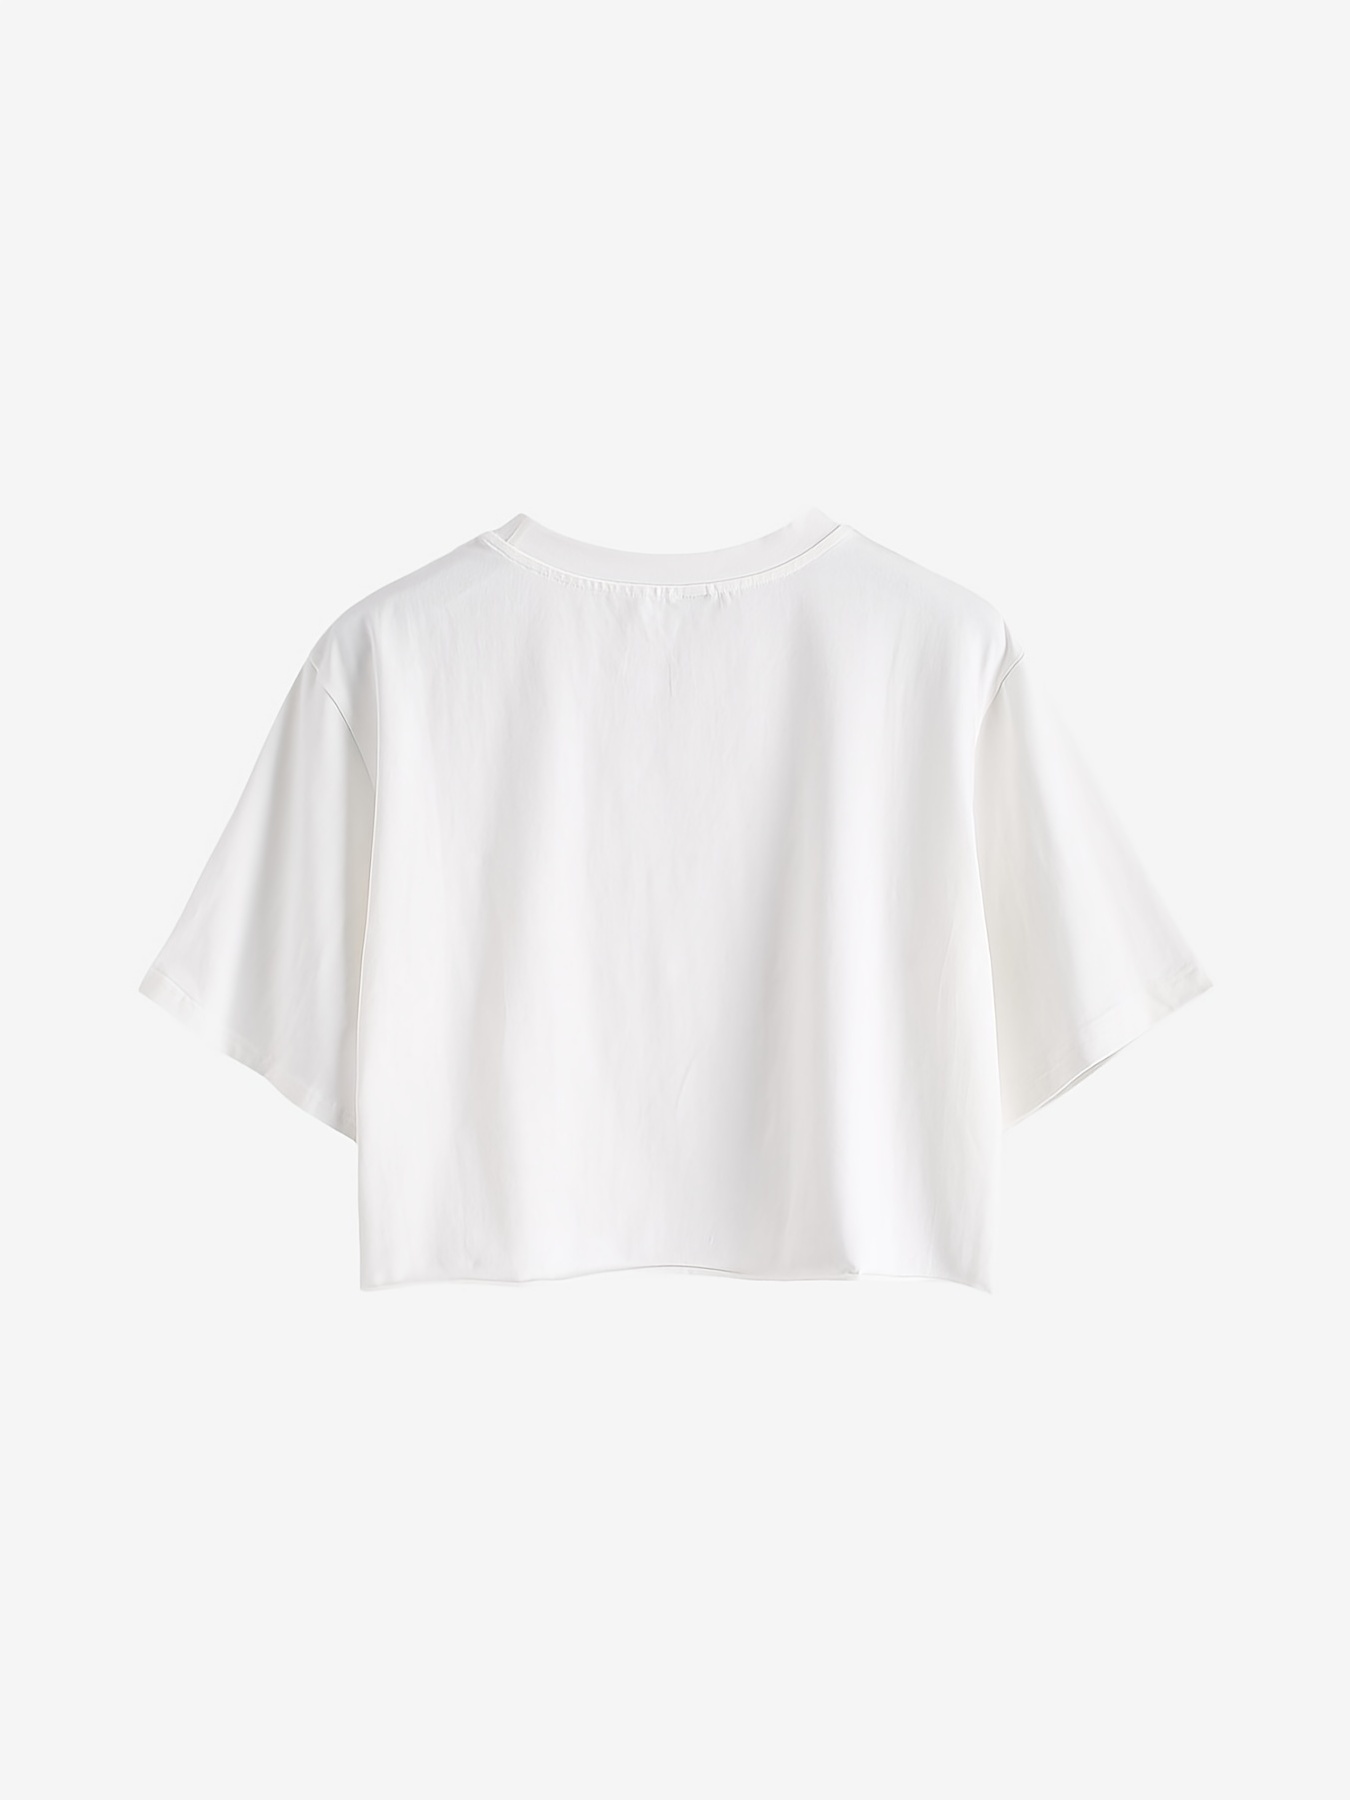 Plain Loose Crop Top T-Shirt, Solid Color O-Neck Short Sleeve Crop